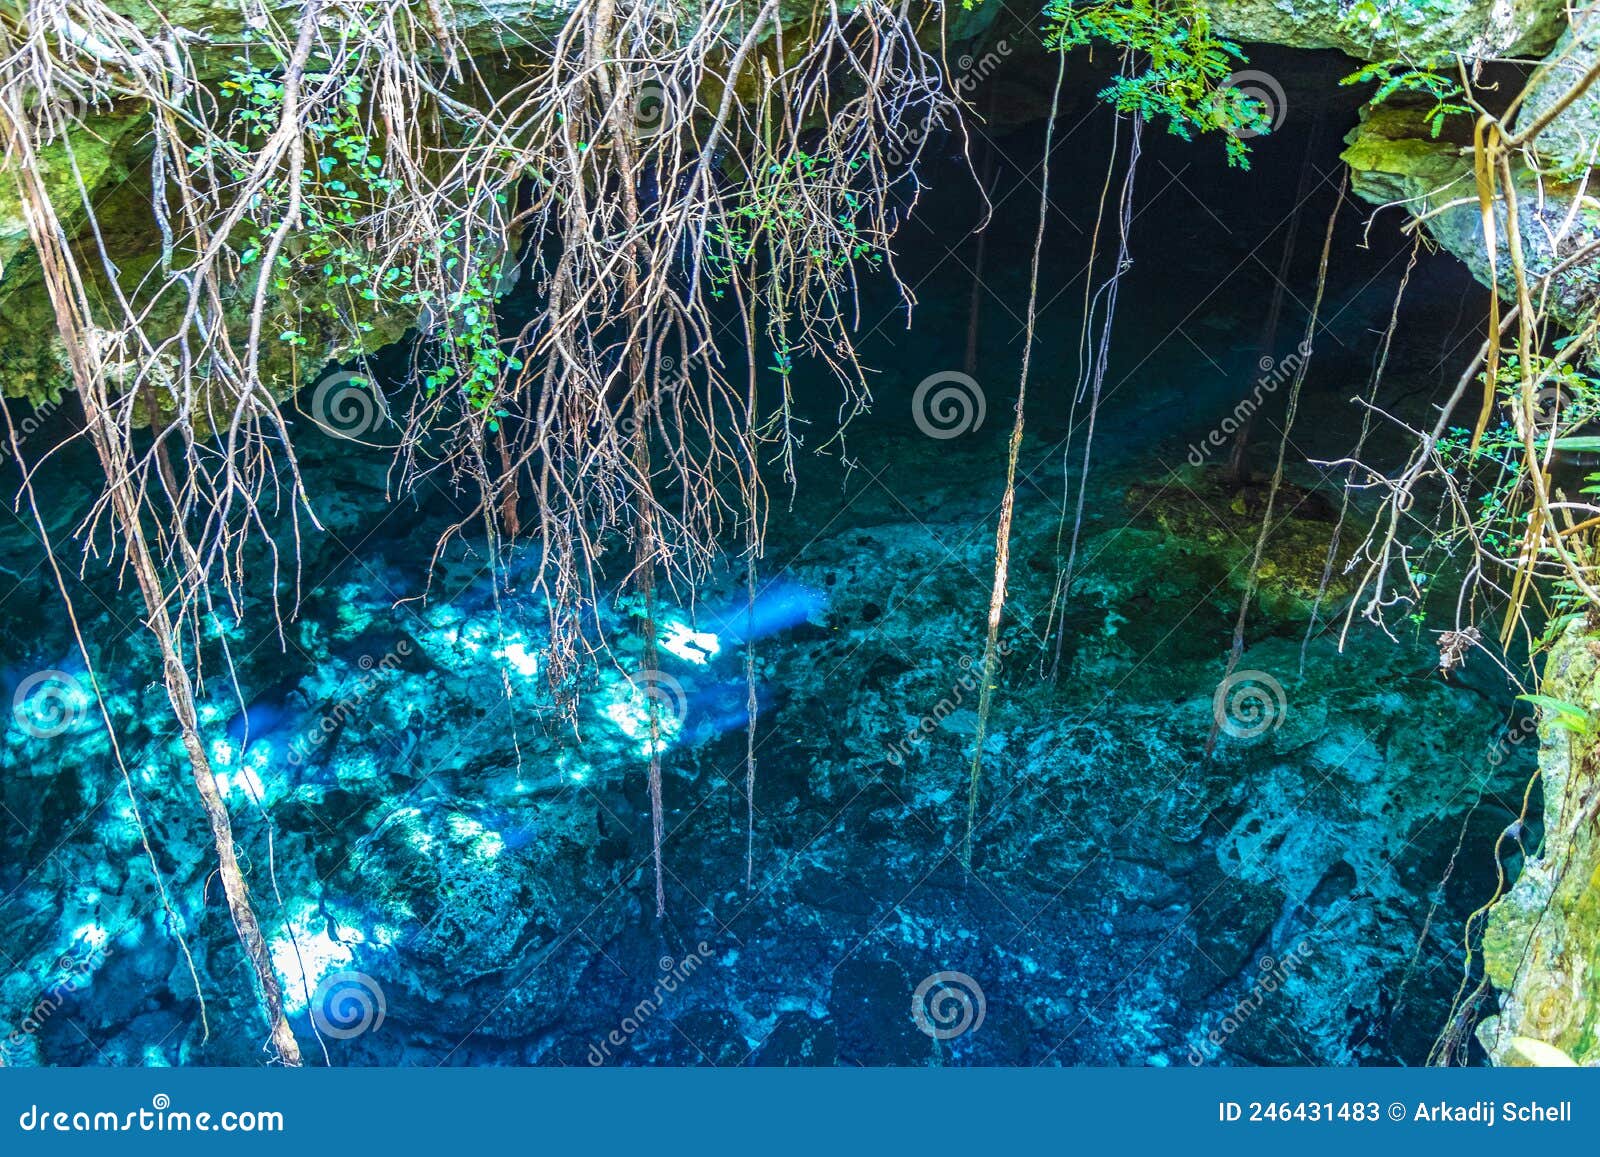 https://thumbs.dreamstime.com/z/blue-turquoise-water-limestone-cave-sinkhole-cenote-tajma-ha-mexico-amazing-tajmaha-puerto-aventuras-quintana-roo-246431483.jpg